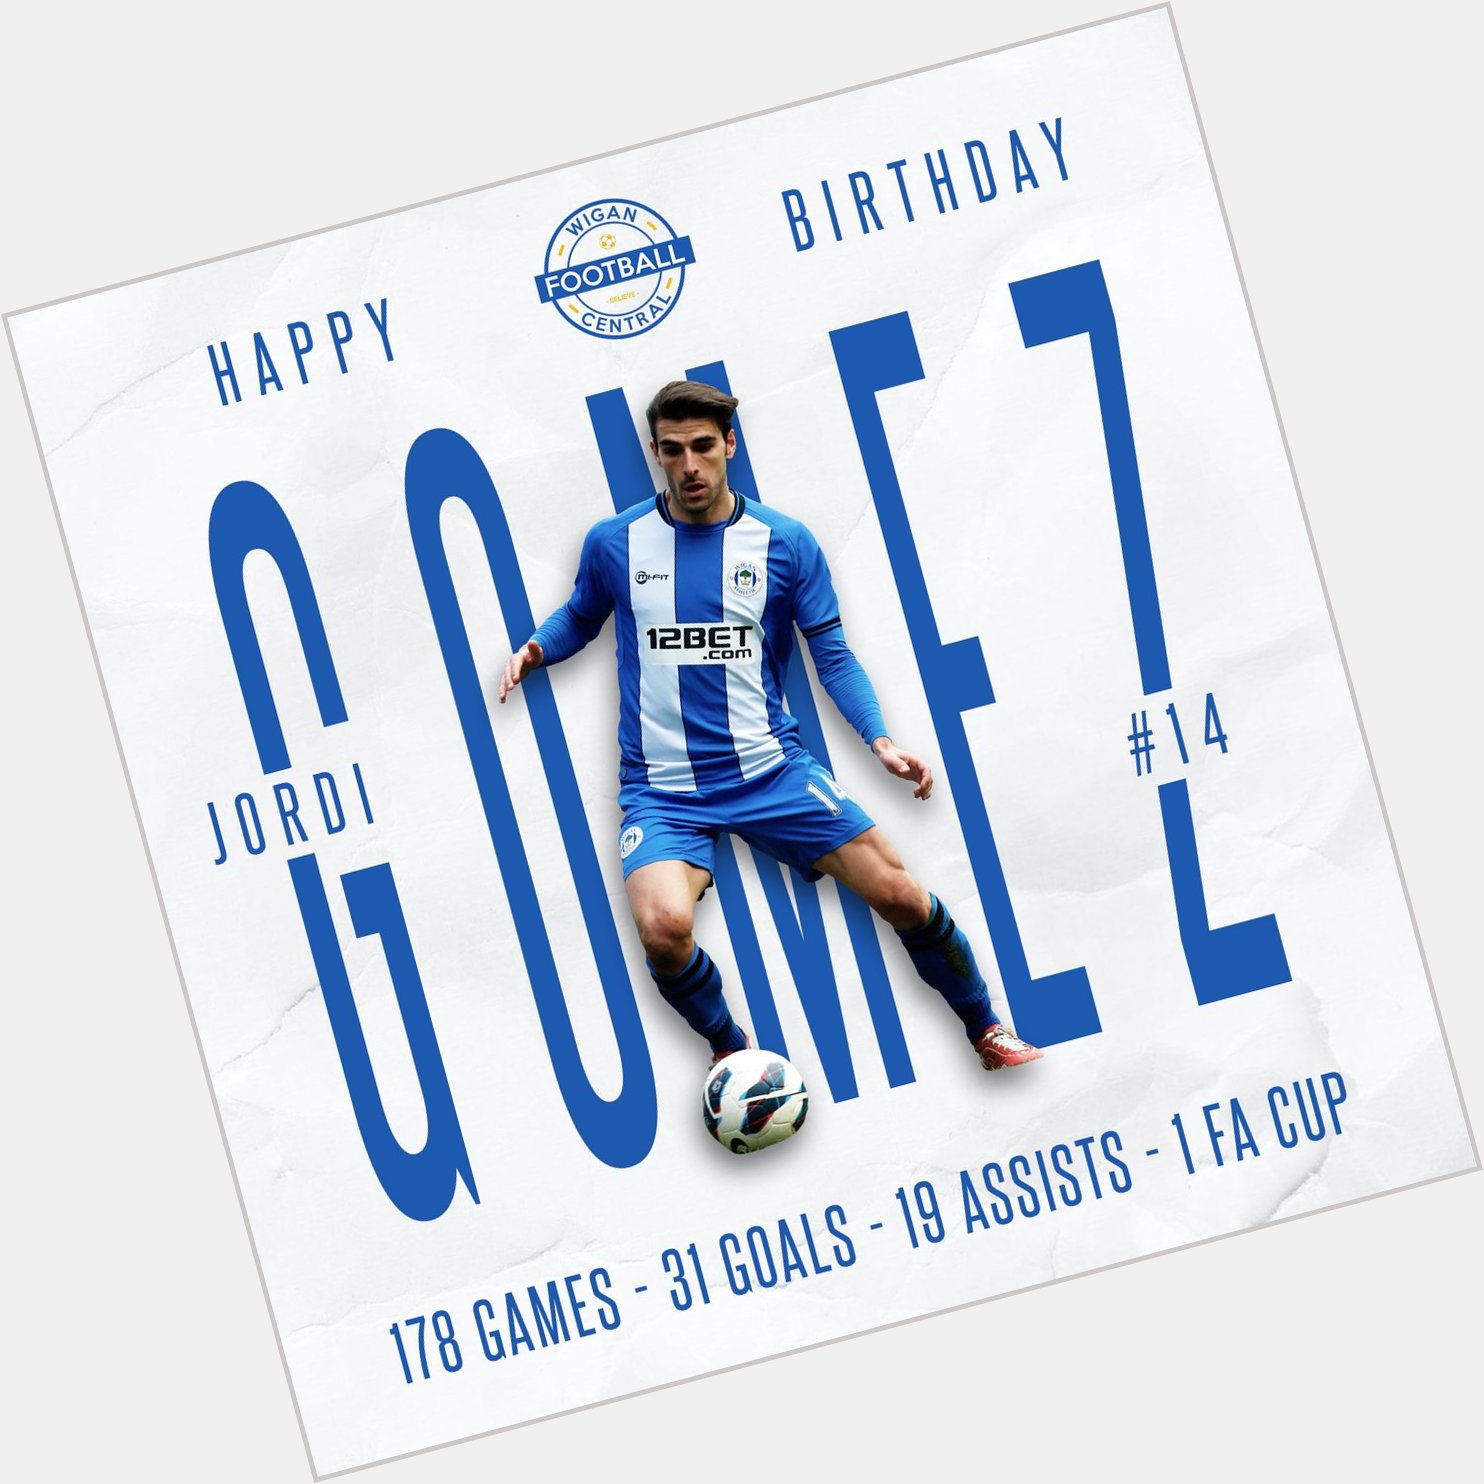 Happy Birthday to former Wigan midfielder, Jordi Gomez 178 Games - 31 Goals - 19 Assists - 1 FA Cup 